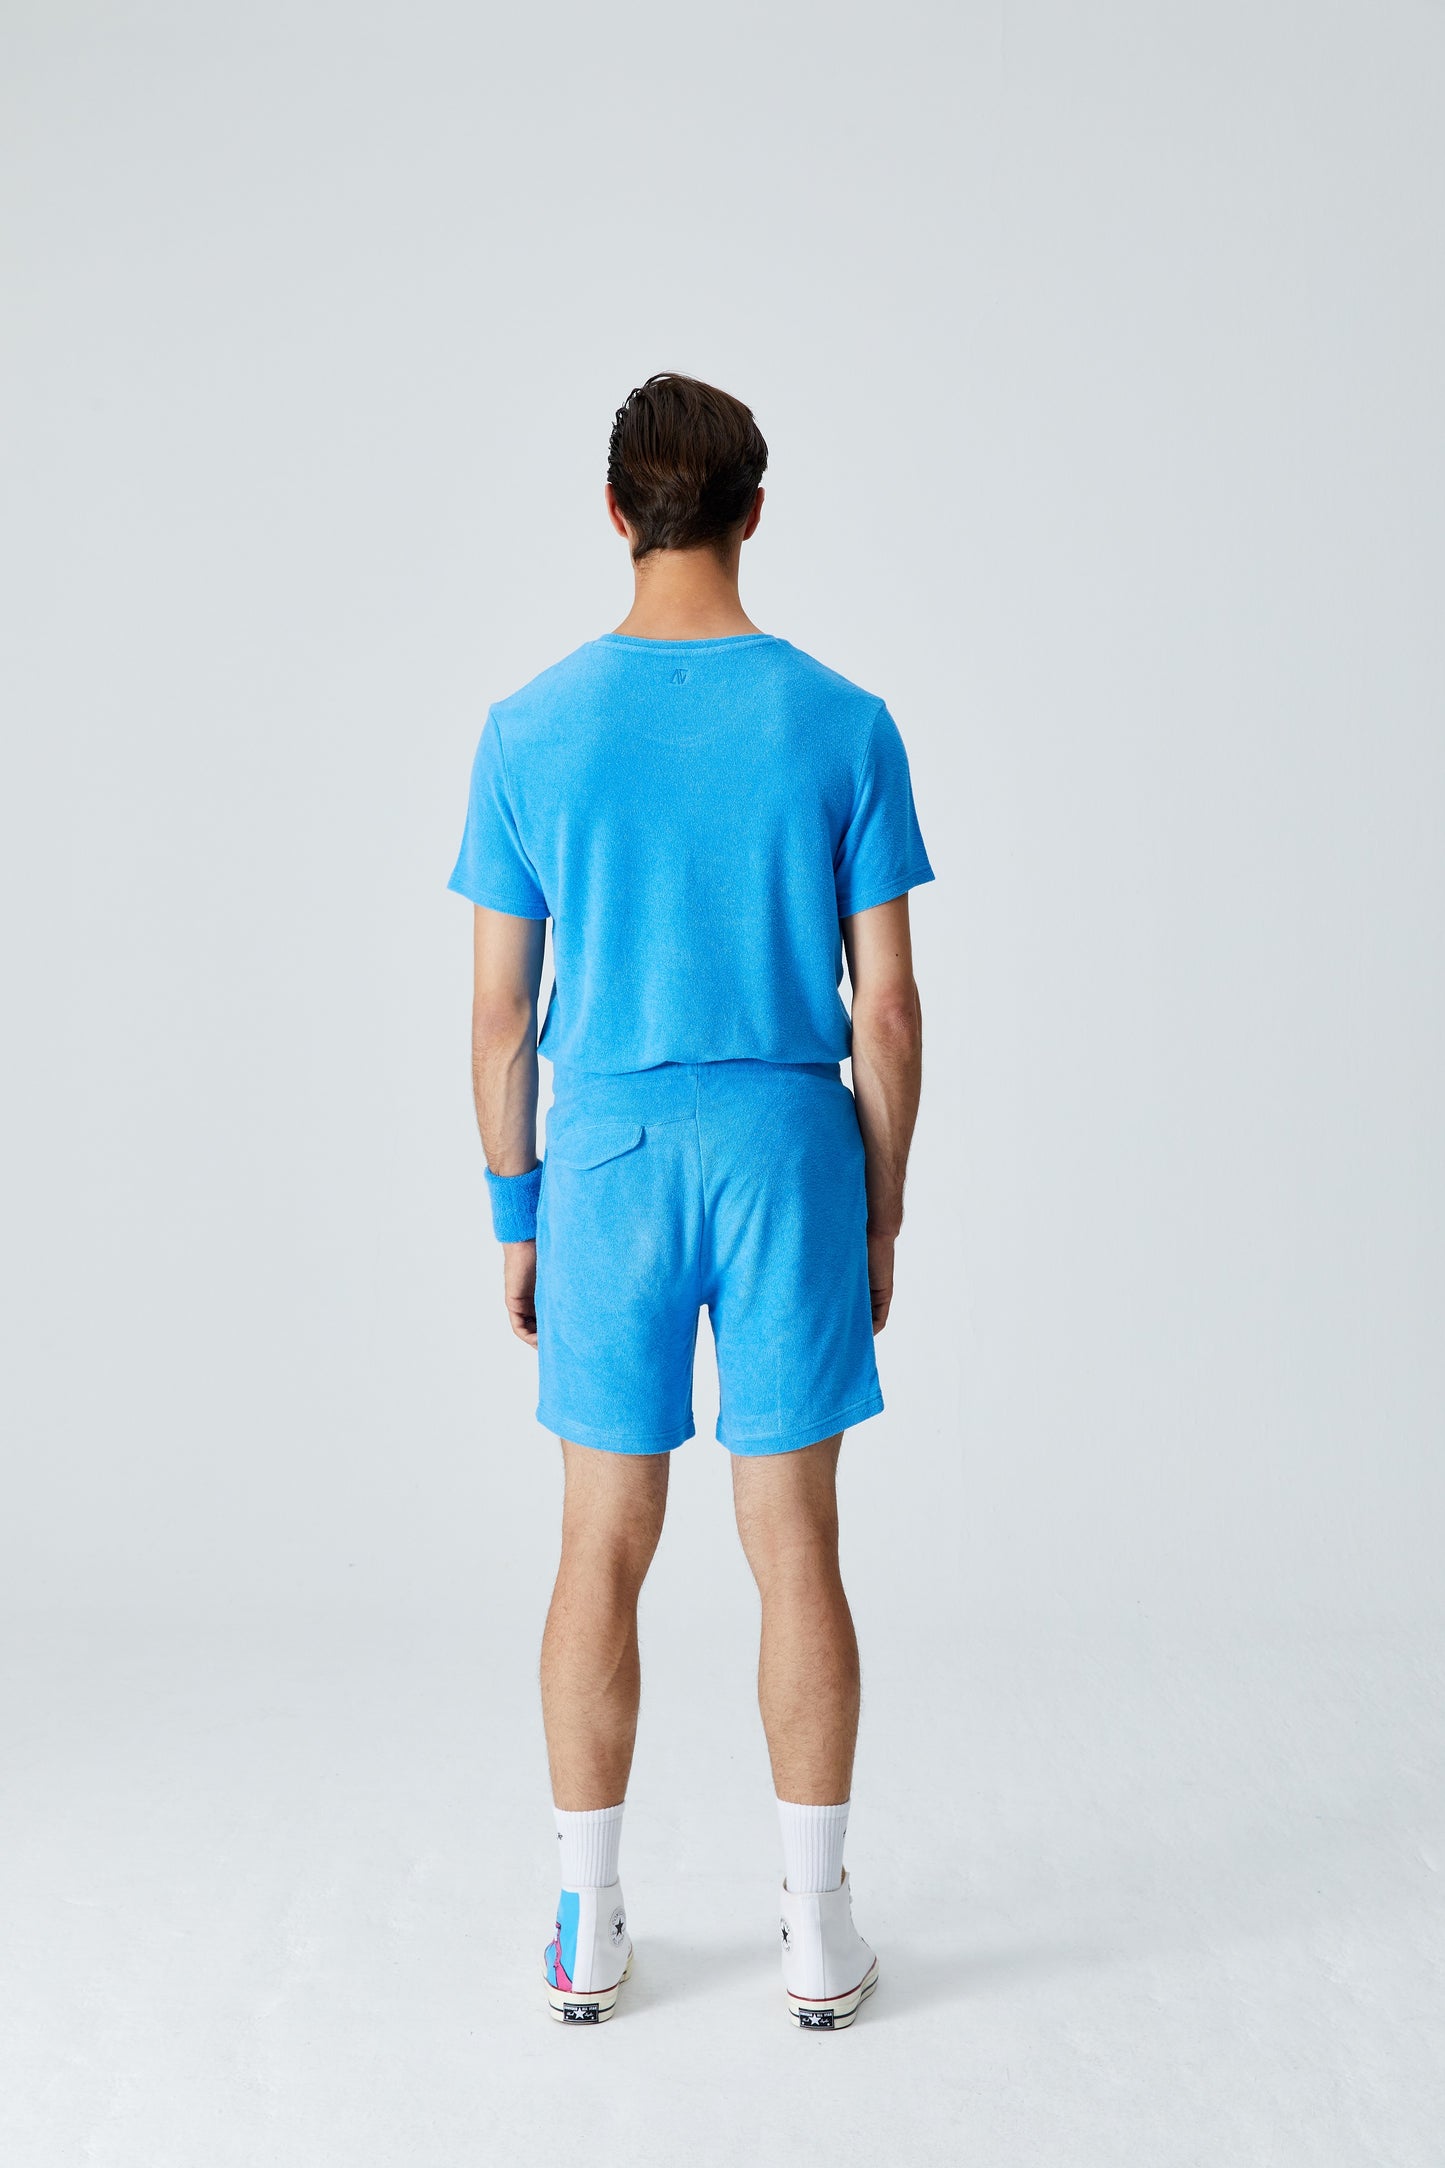 Towel Shorts - Tranquila Blue